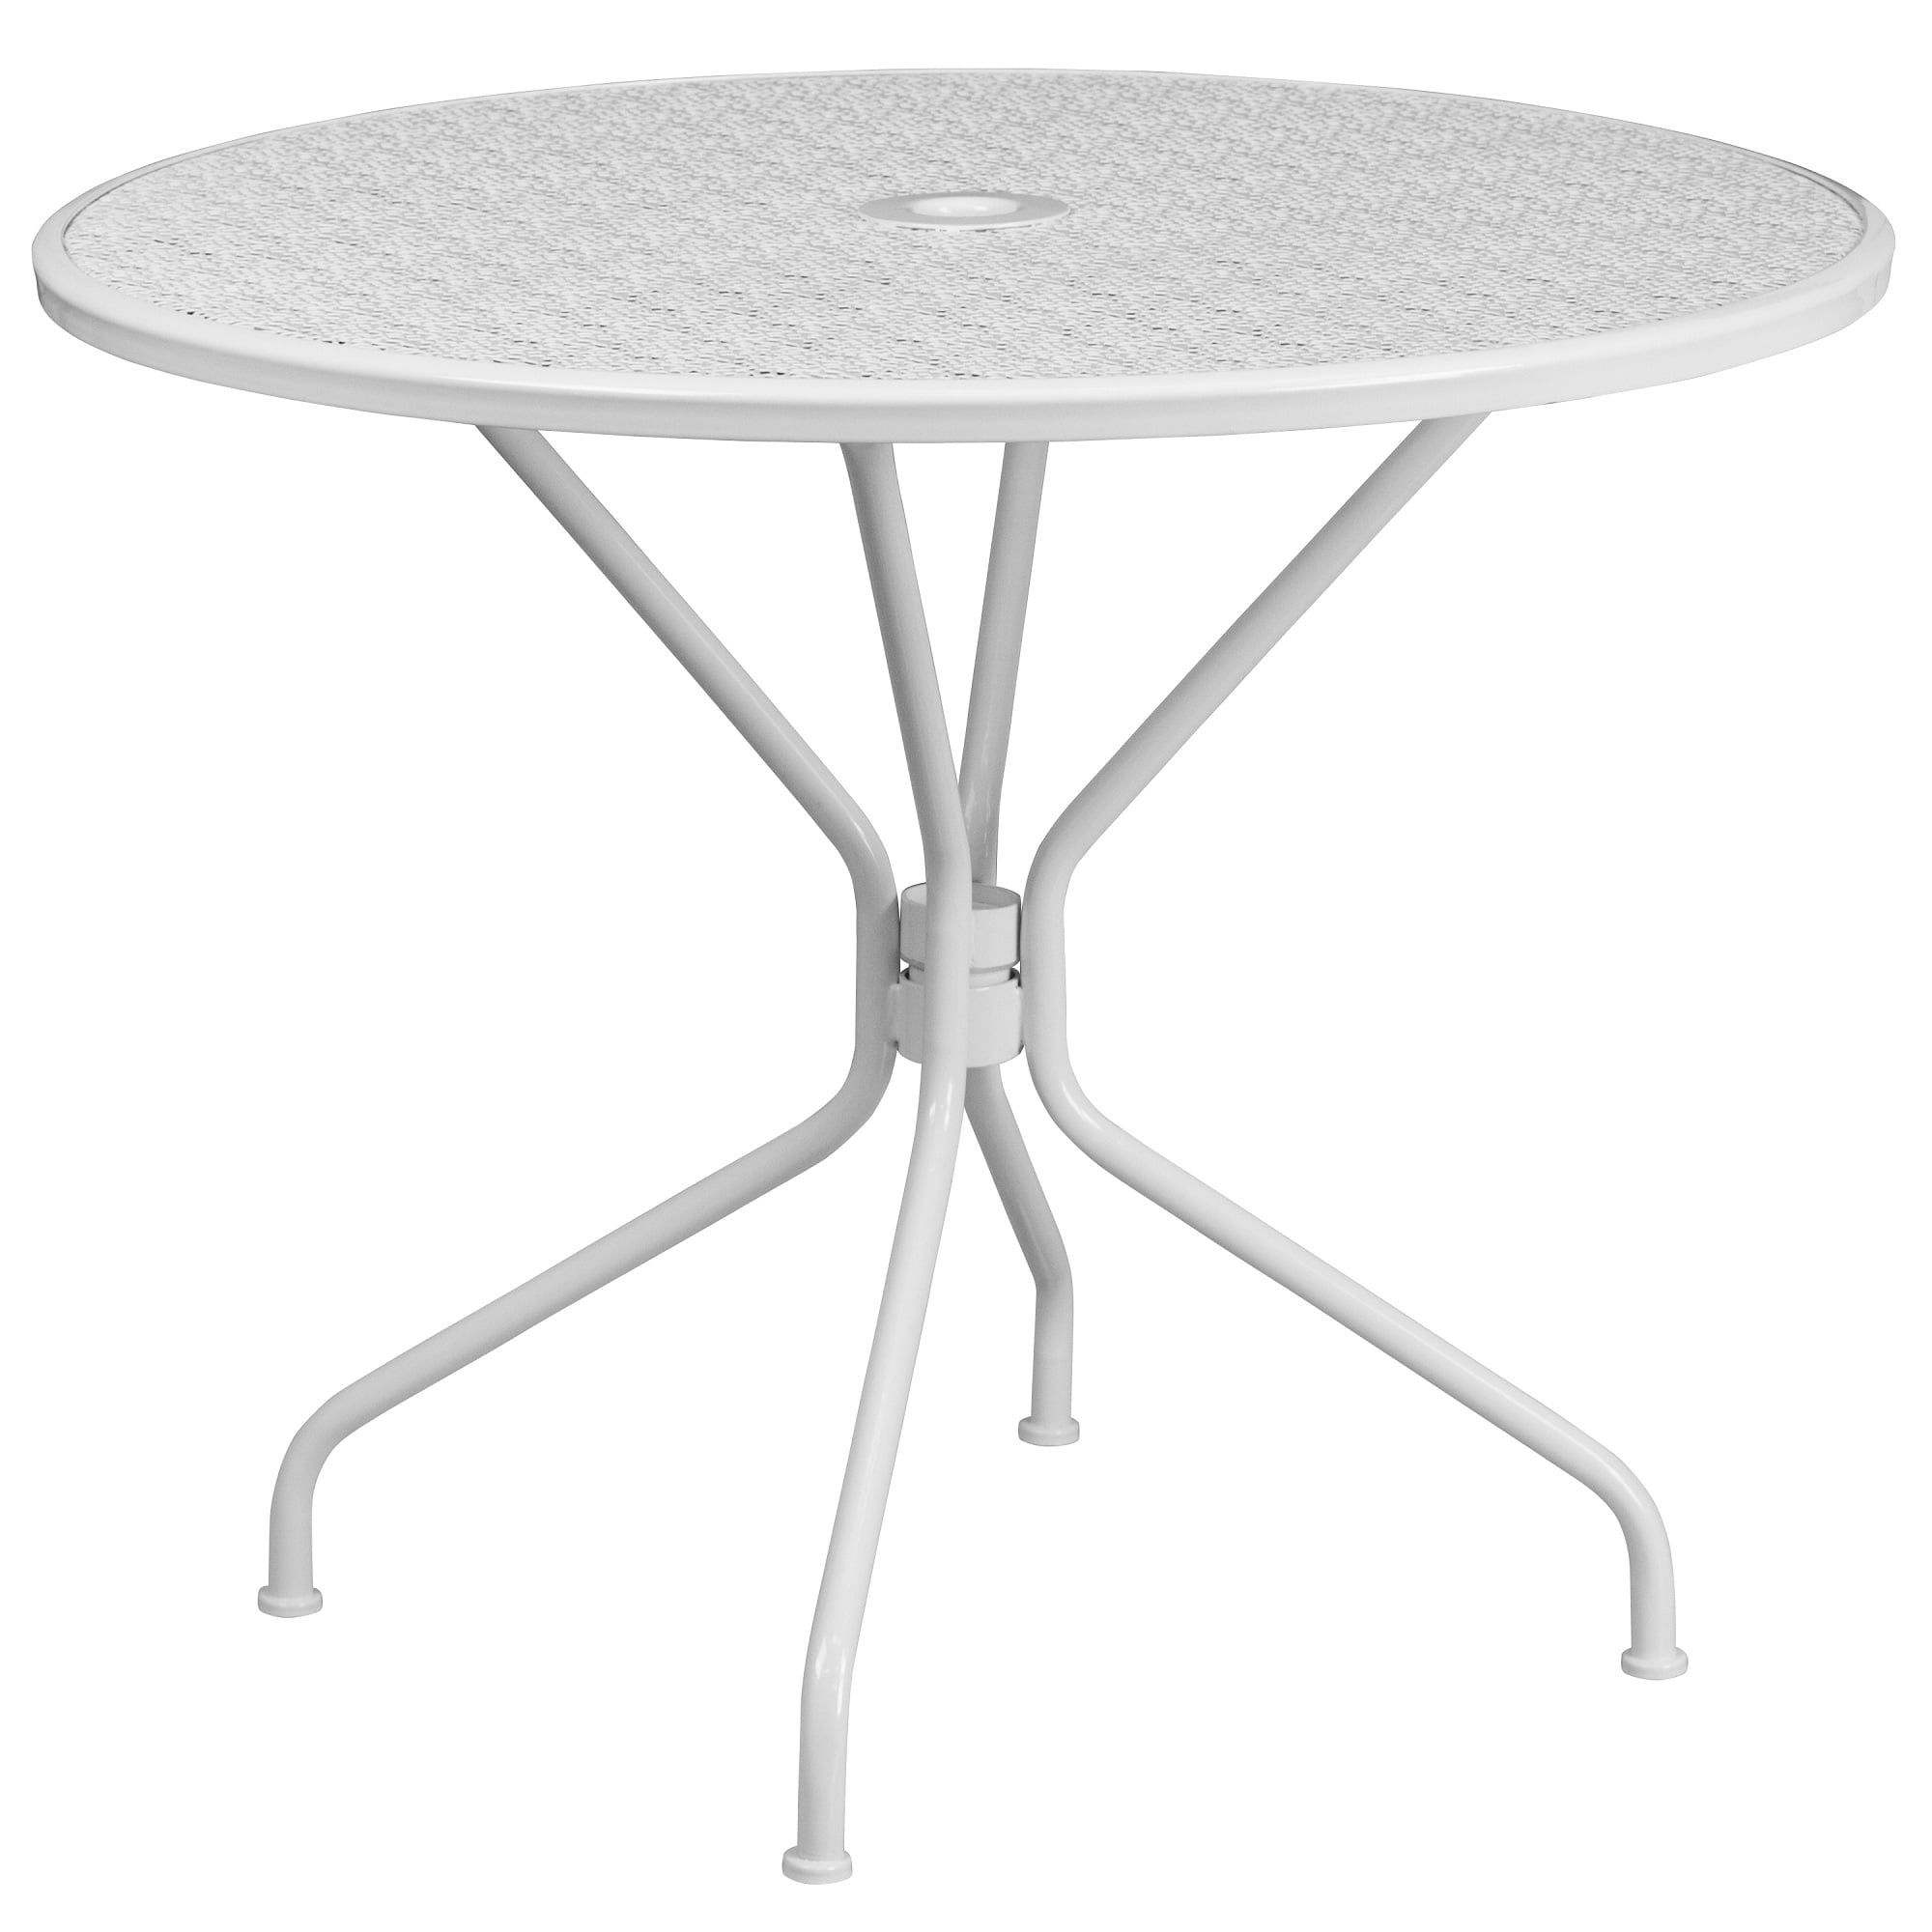 35 25 White Contemporary Round Outdoor Patio Table With Umbrella Hole Com - Round Patio Table Set With Umbrella Hole